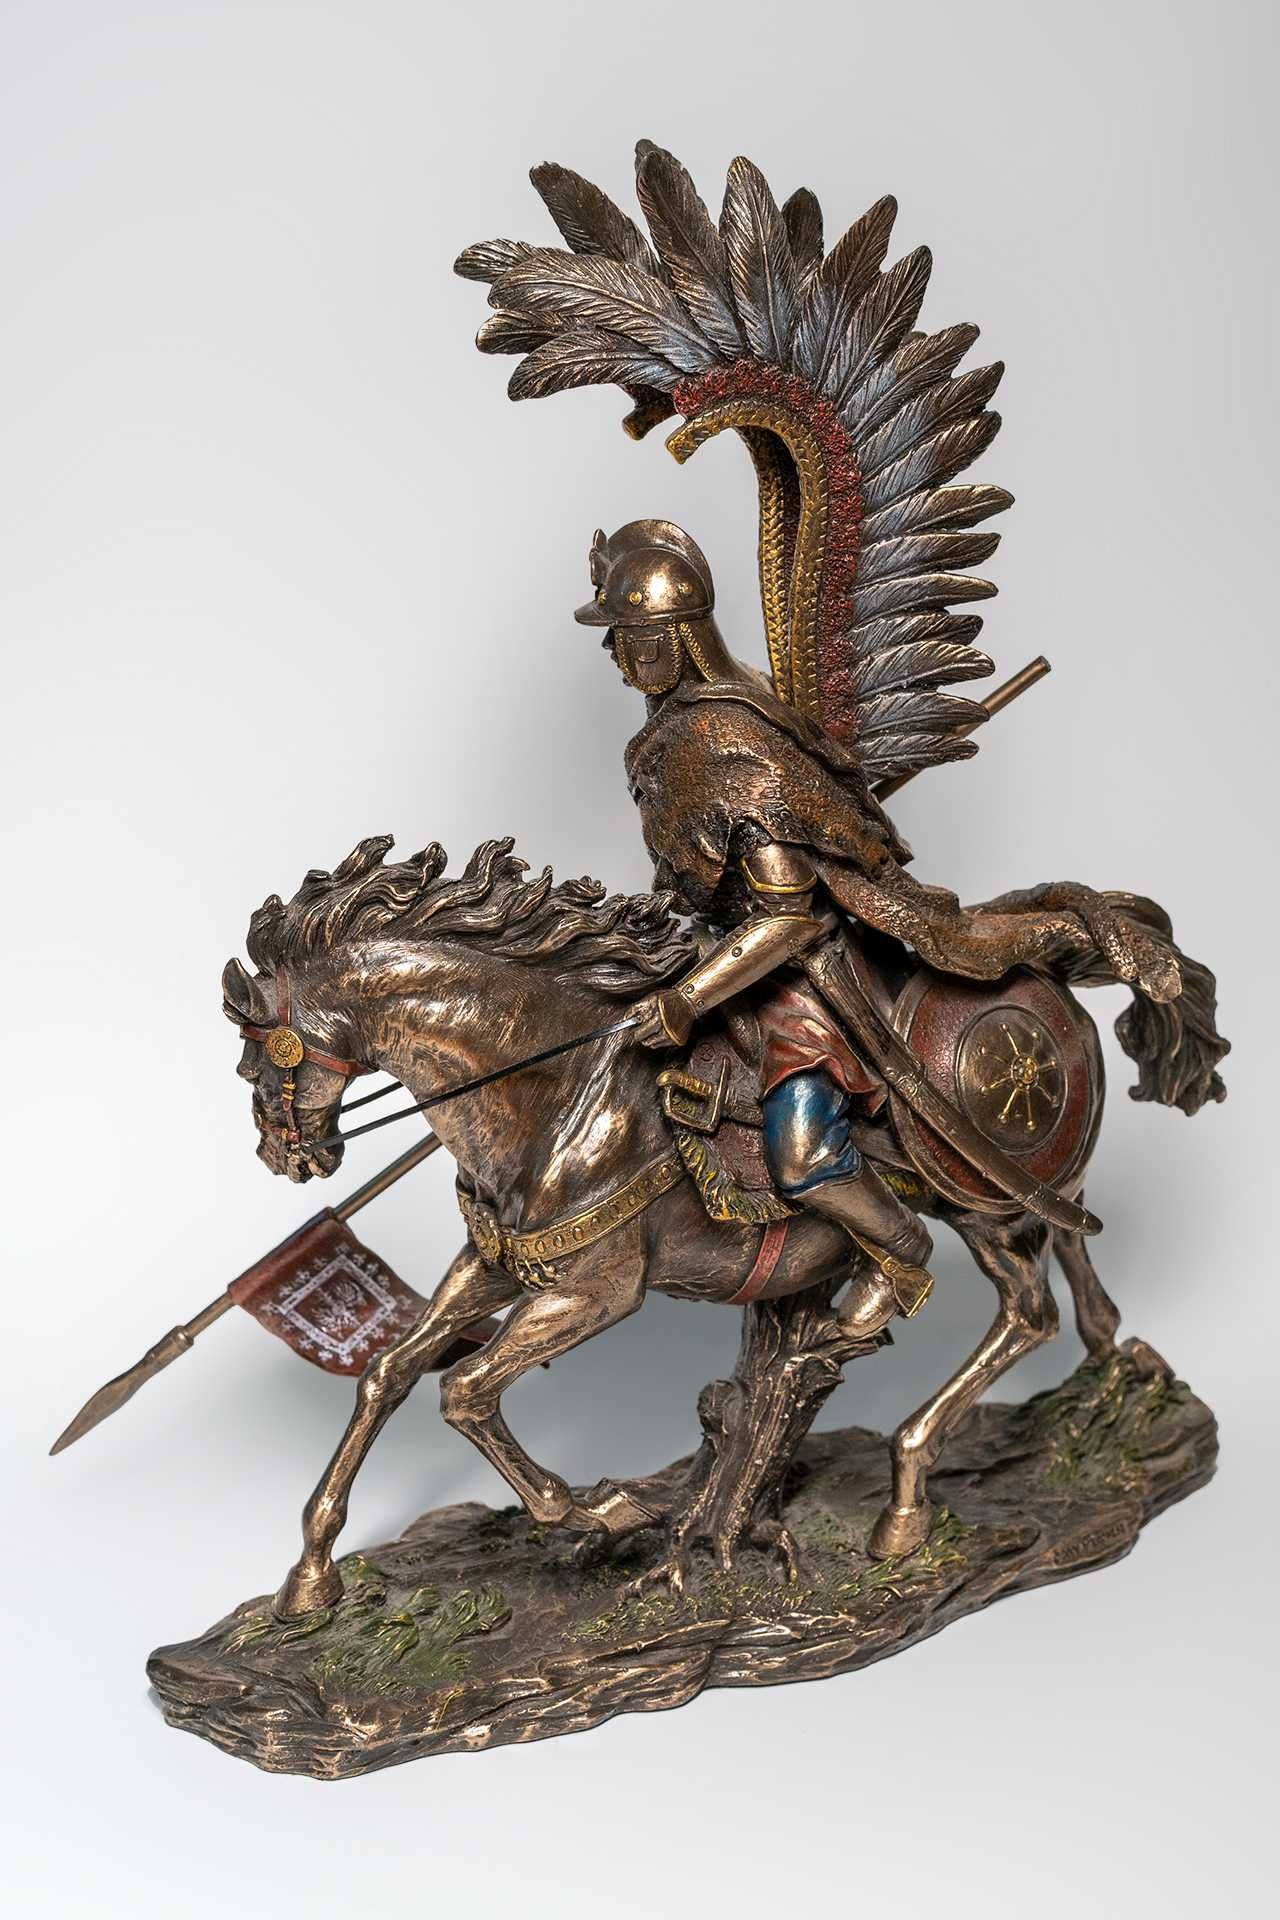 Figurka Husarz Veronese Husaria antyk kolekcja koń żywica prezent